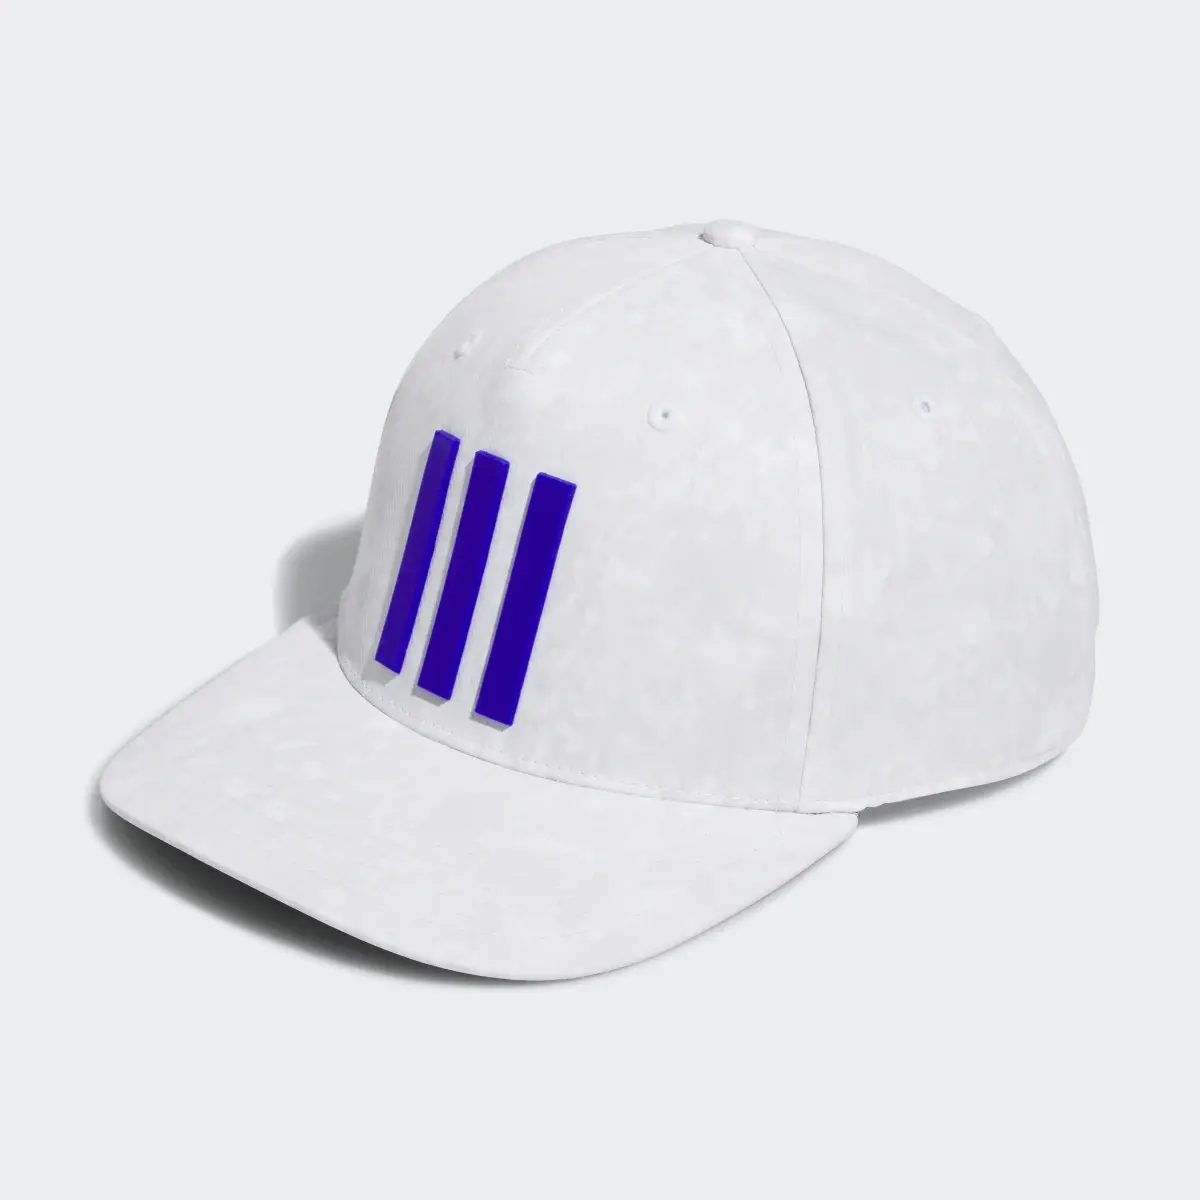 Adidas 3-Stripes Printed Tour Hat. 2